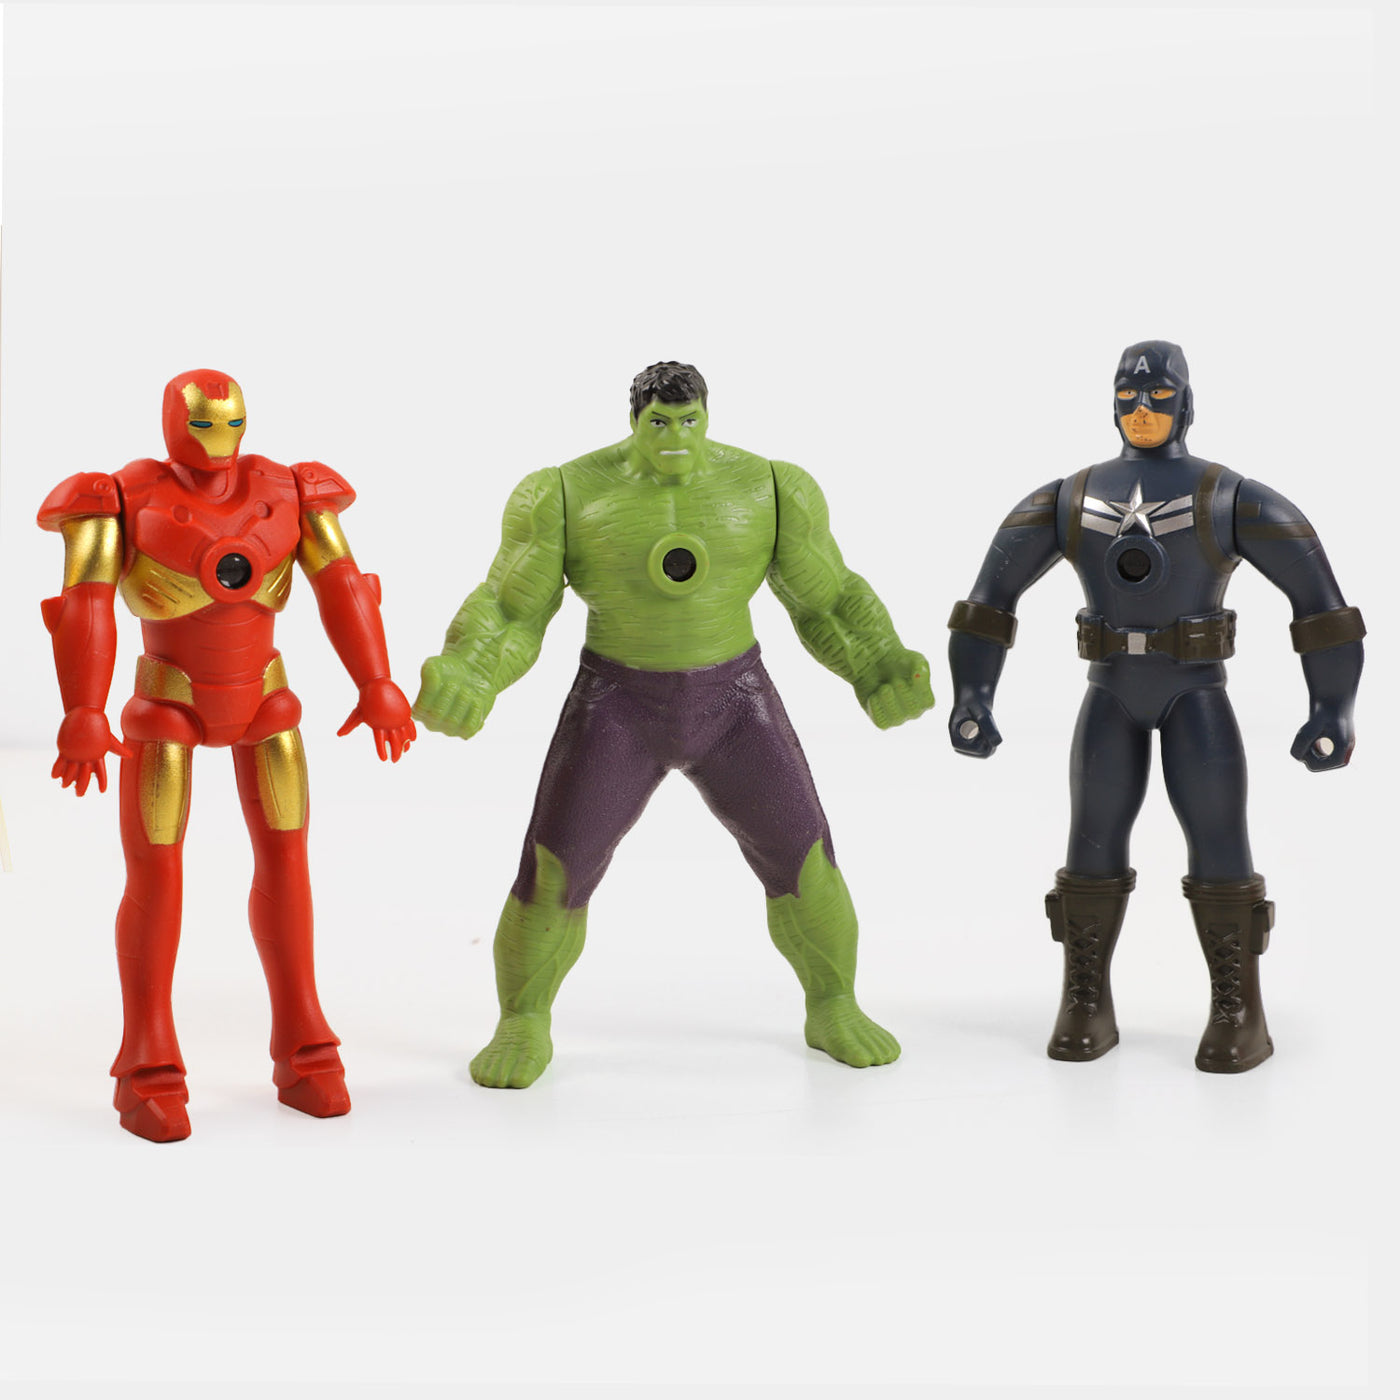 Super Action Hero Figure 5 in 1 Set Toy